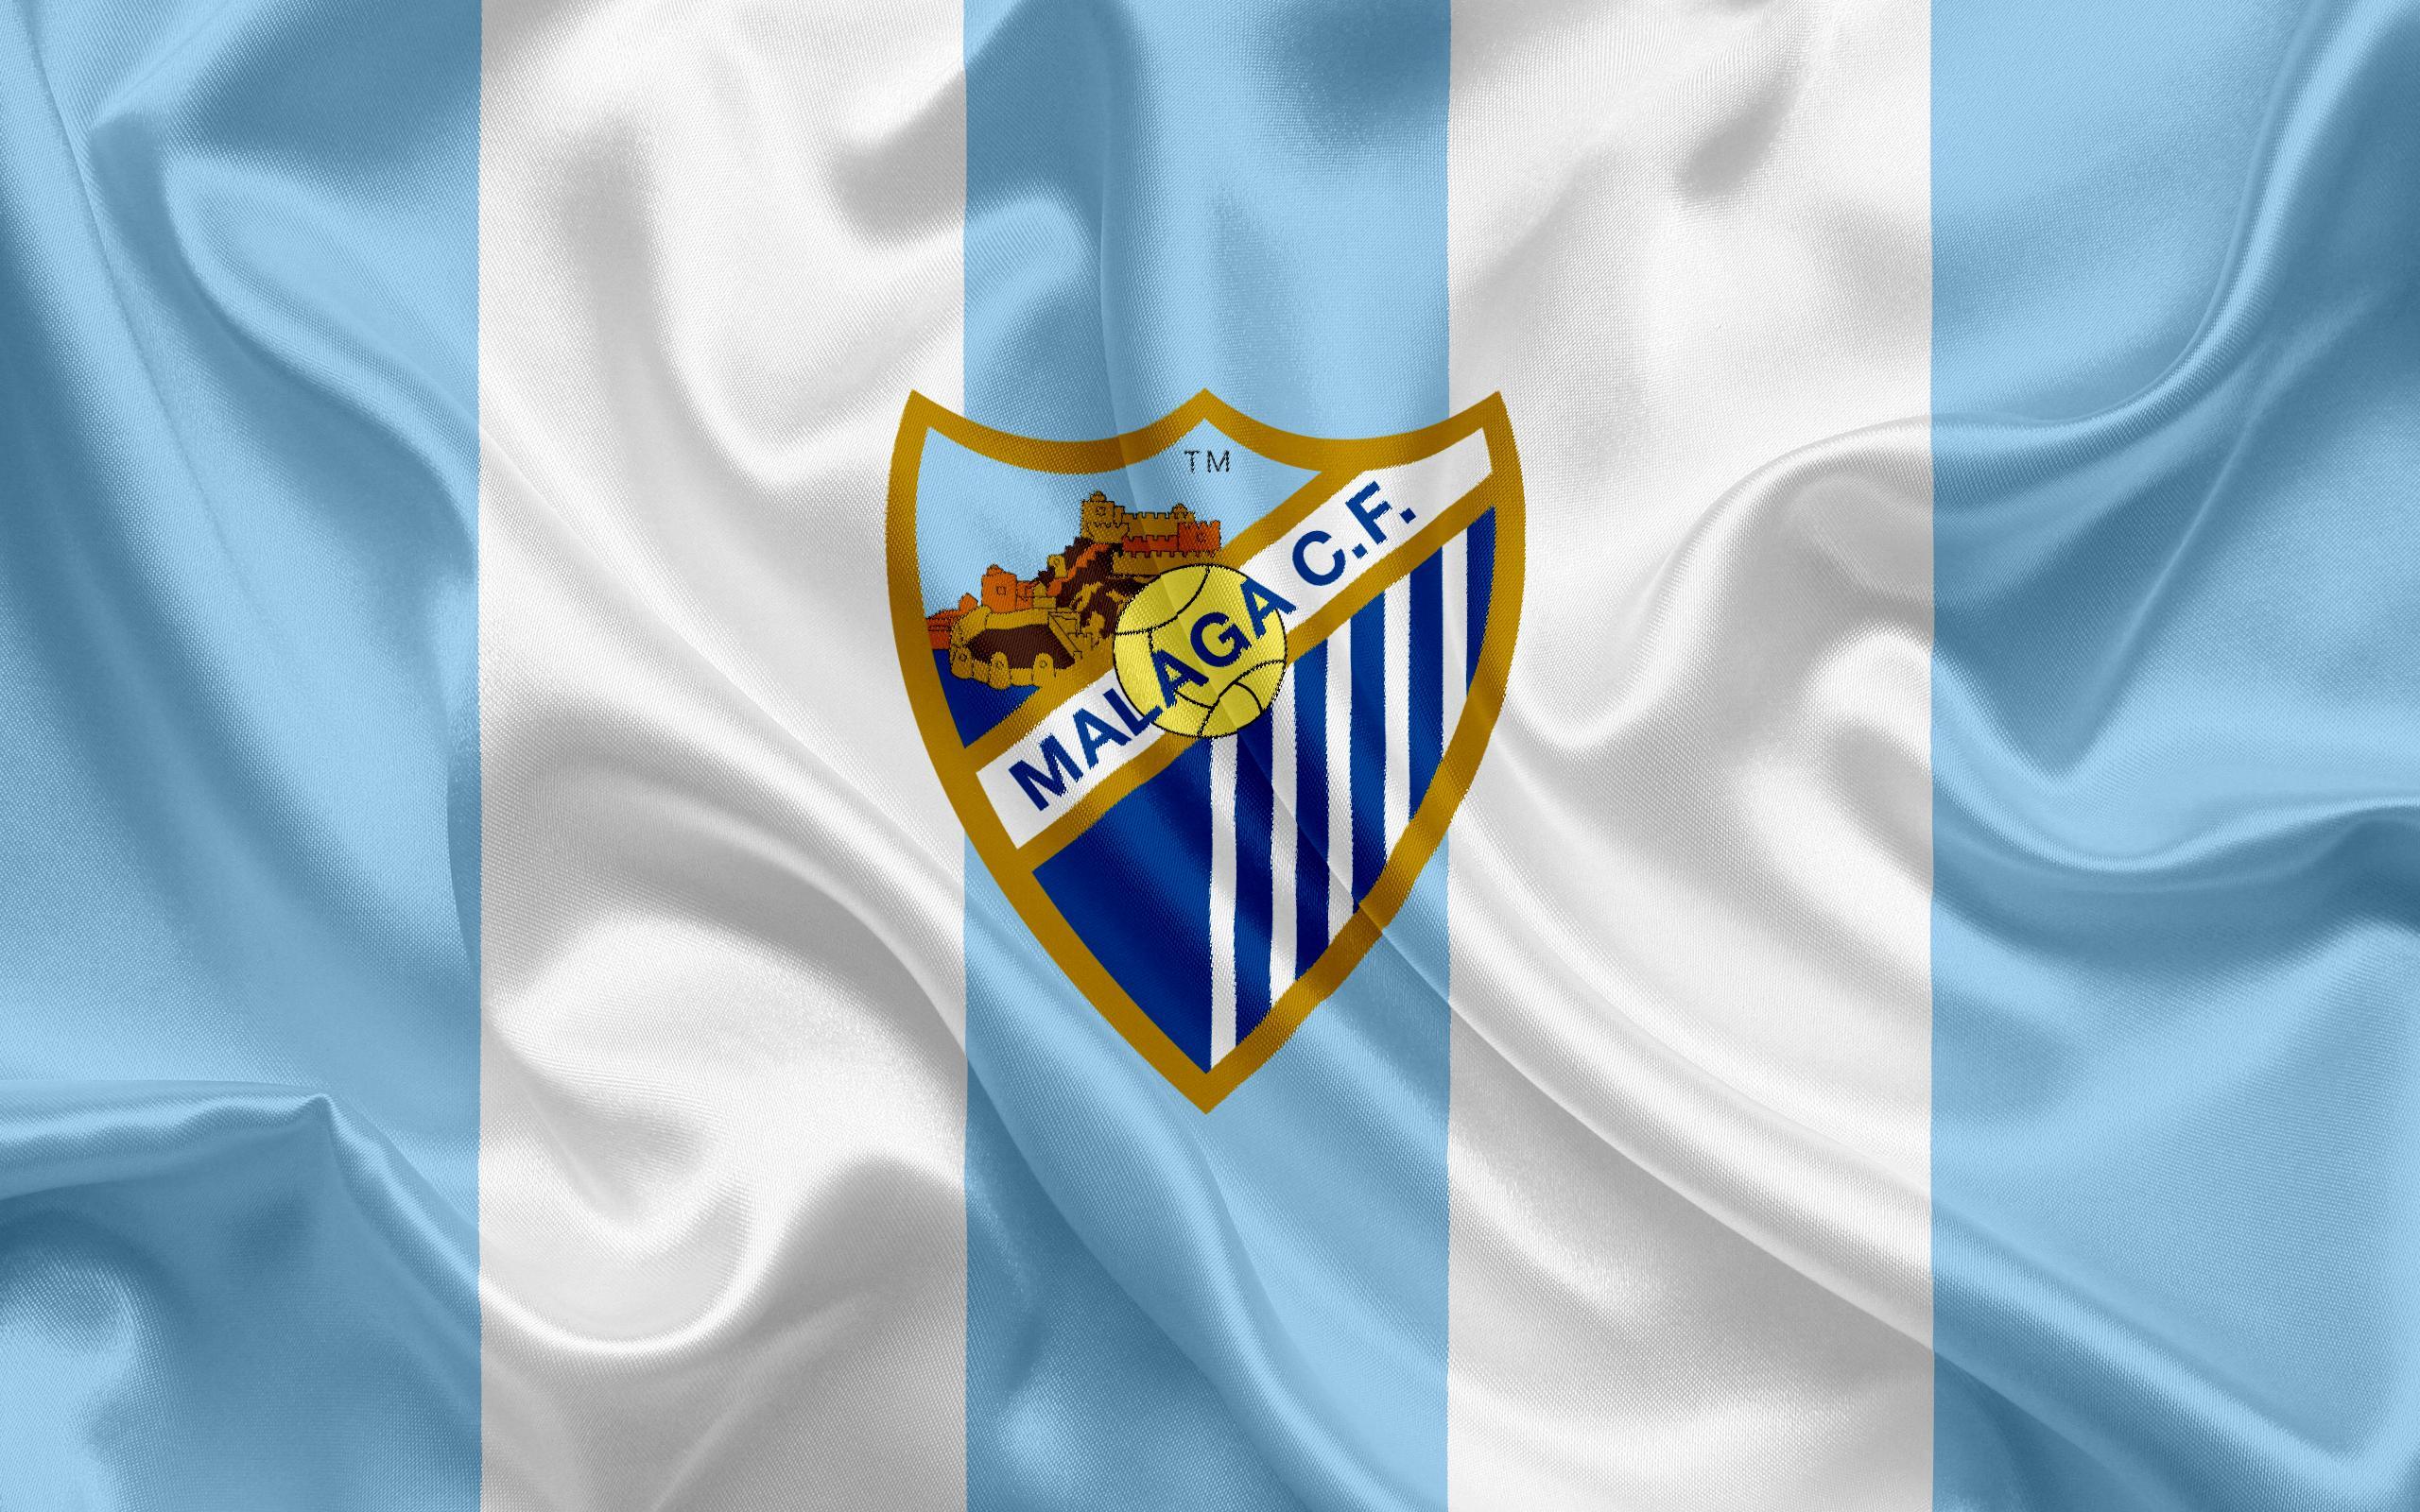 Download wallpaper Malaga FC, football club, Malaga emblem, logo